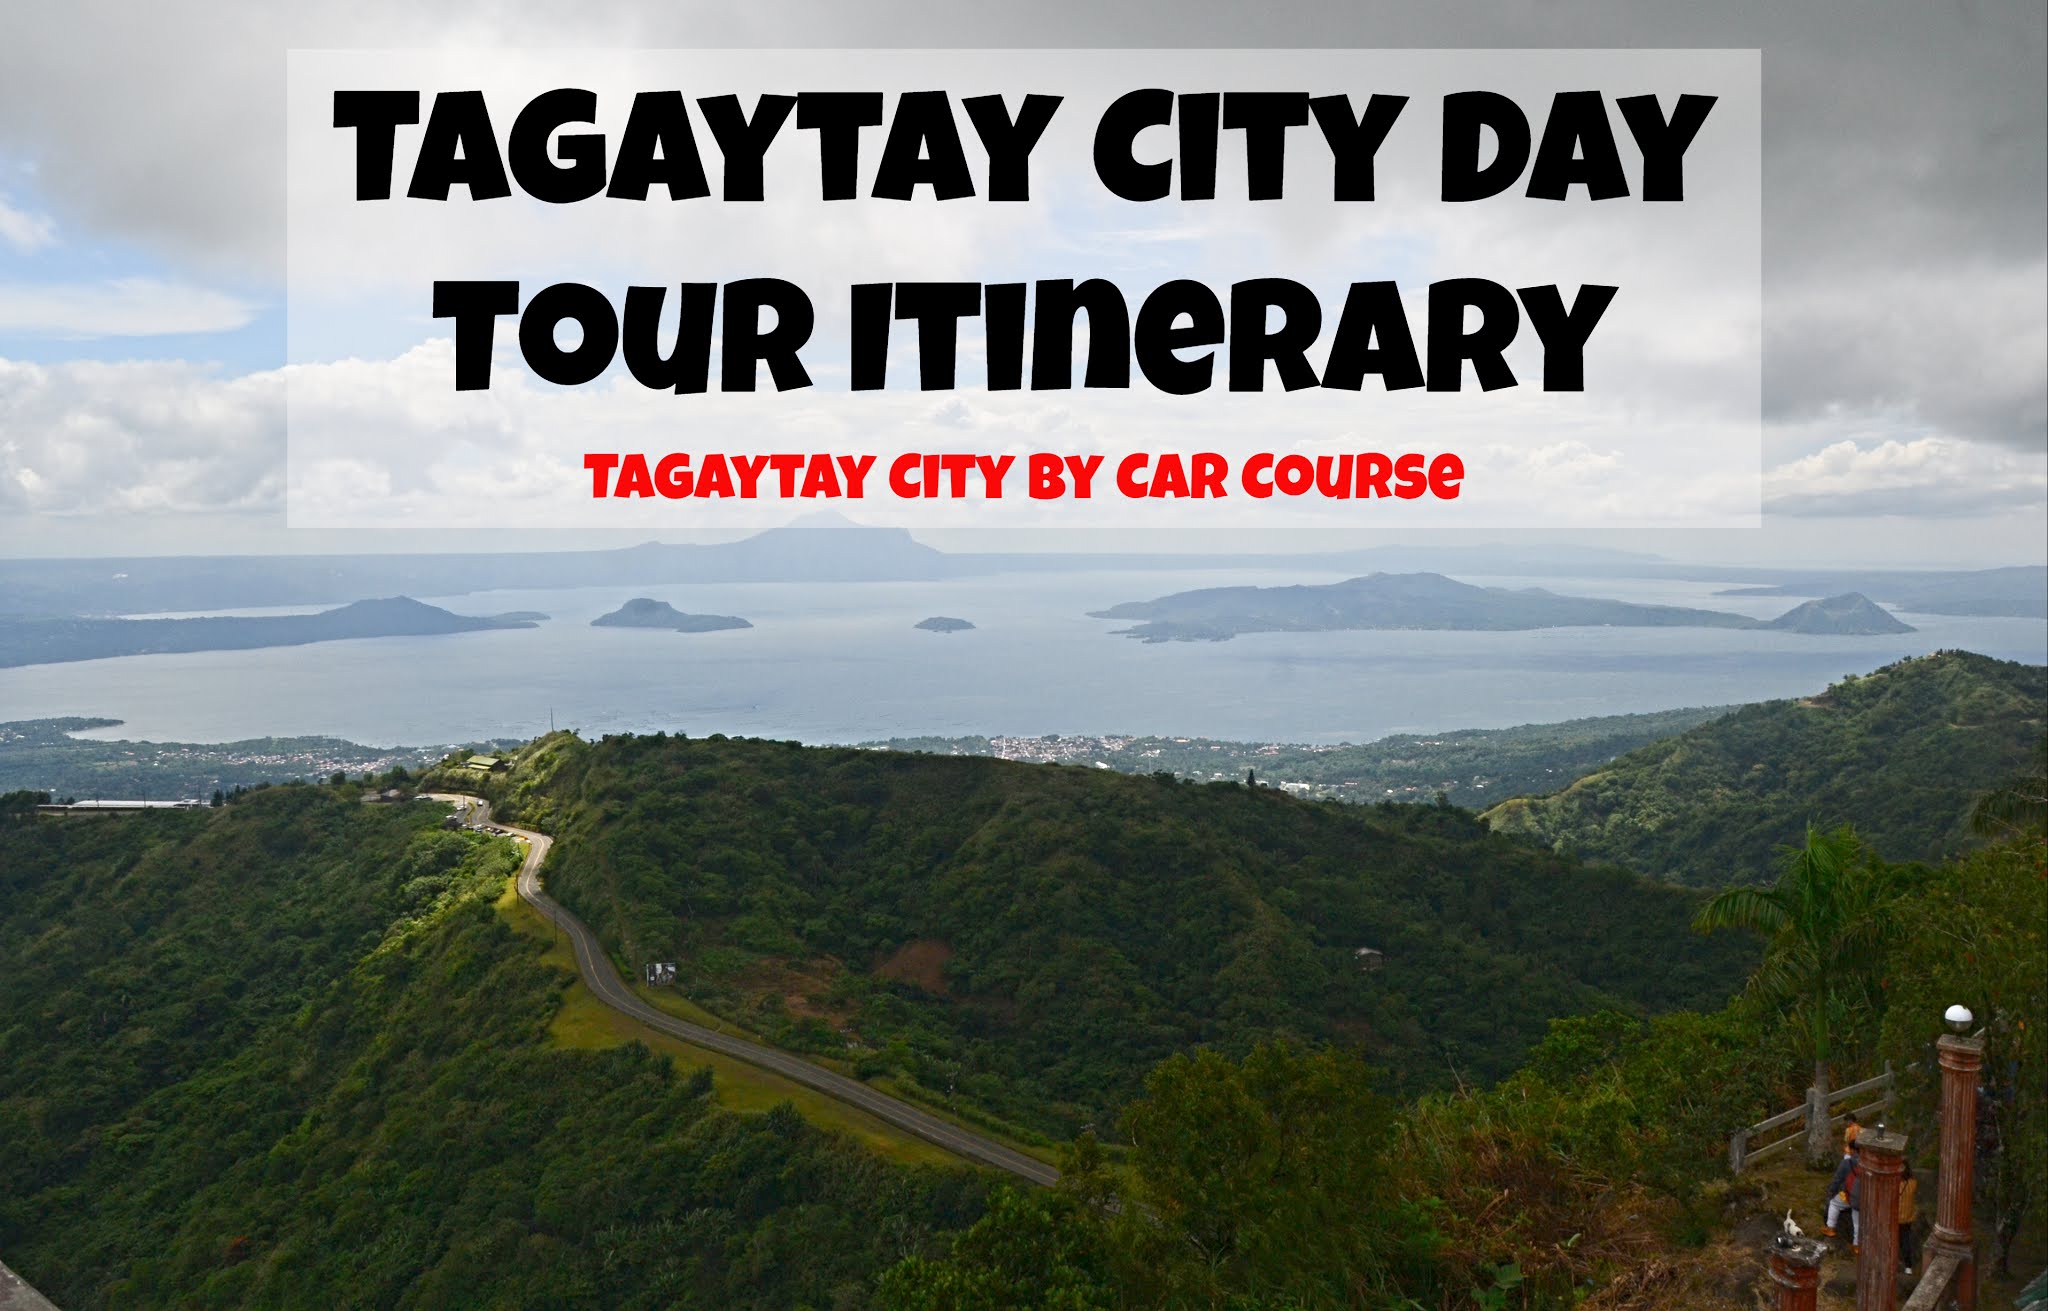 tagaytay tourist spots itinerary 2 days